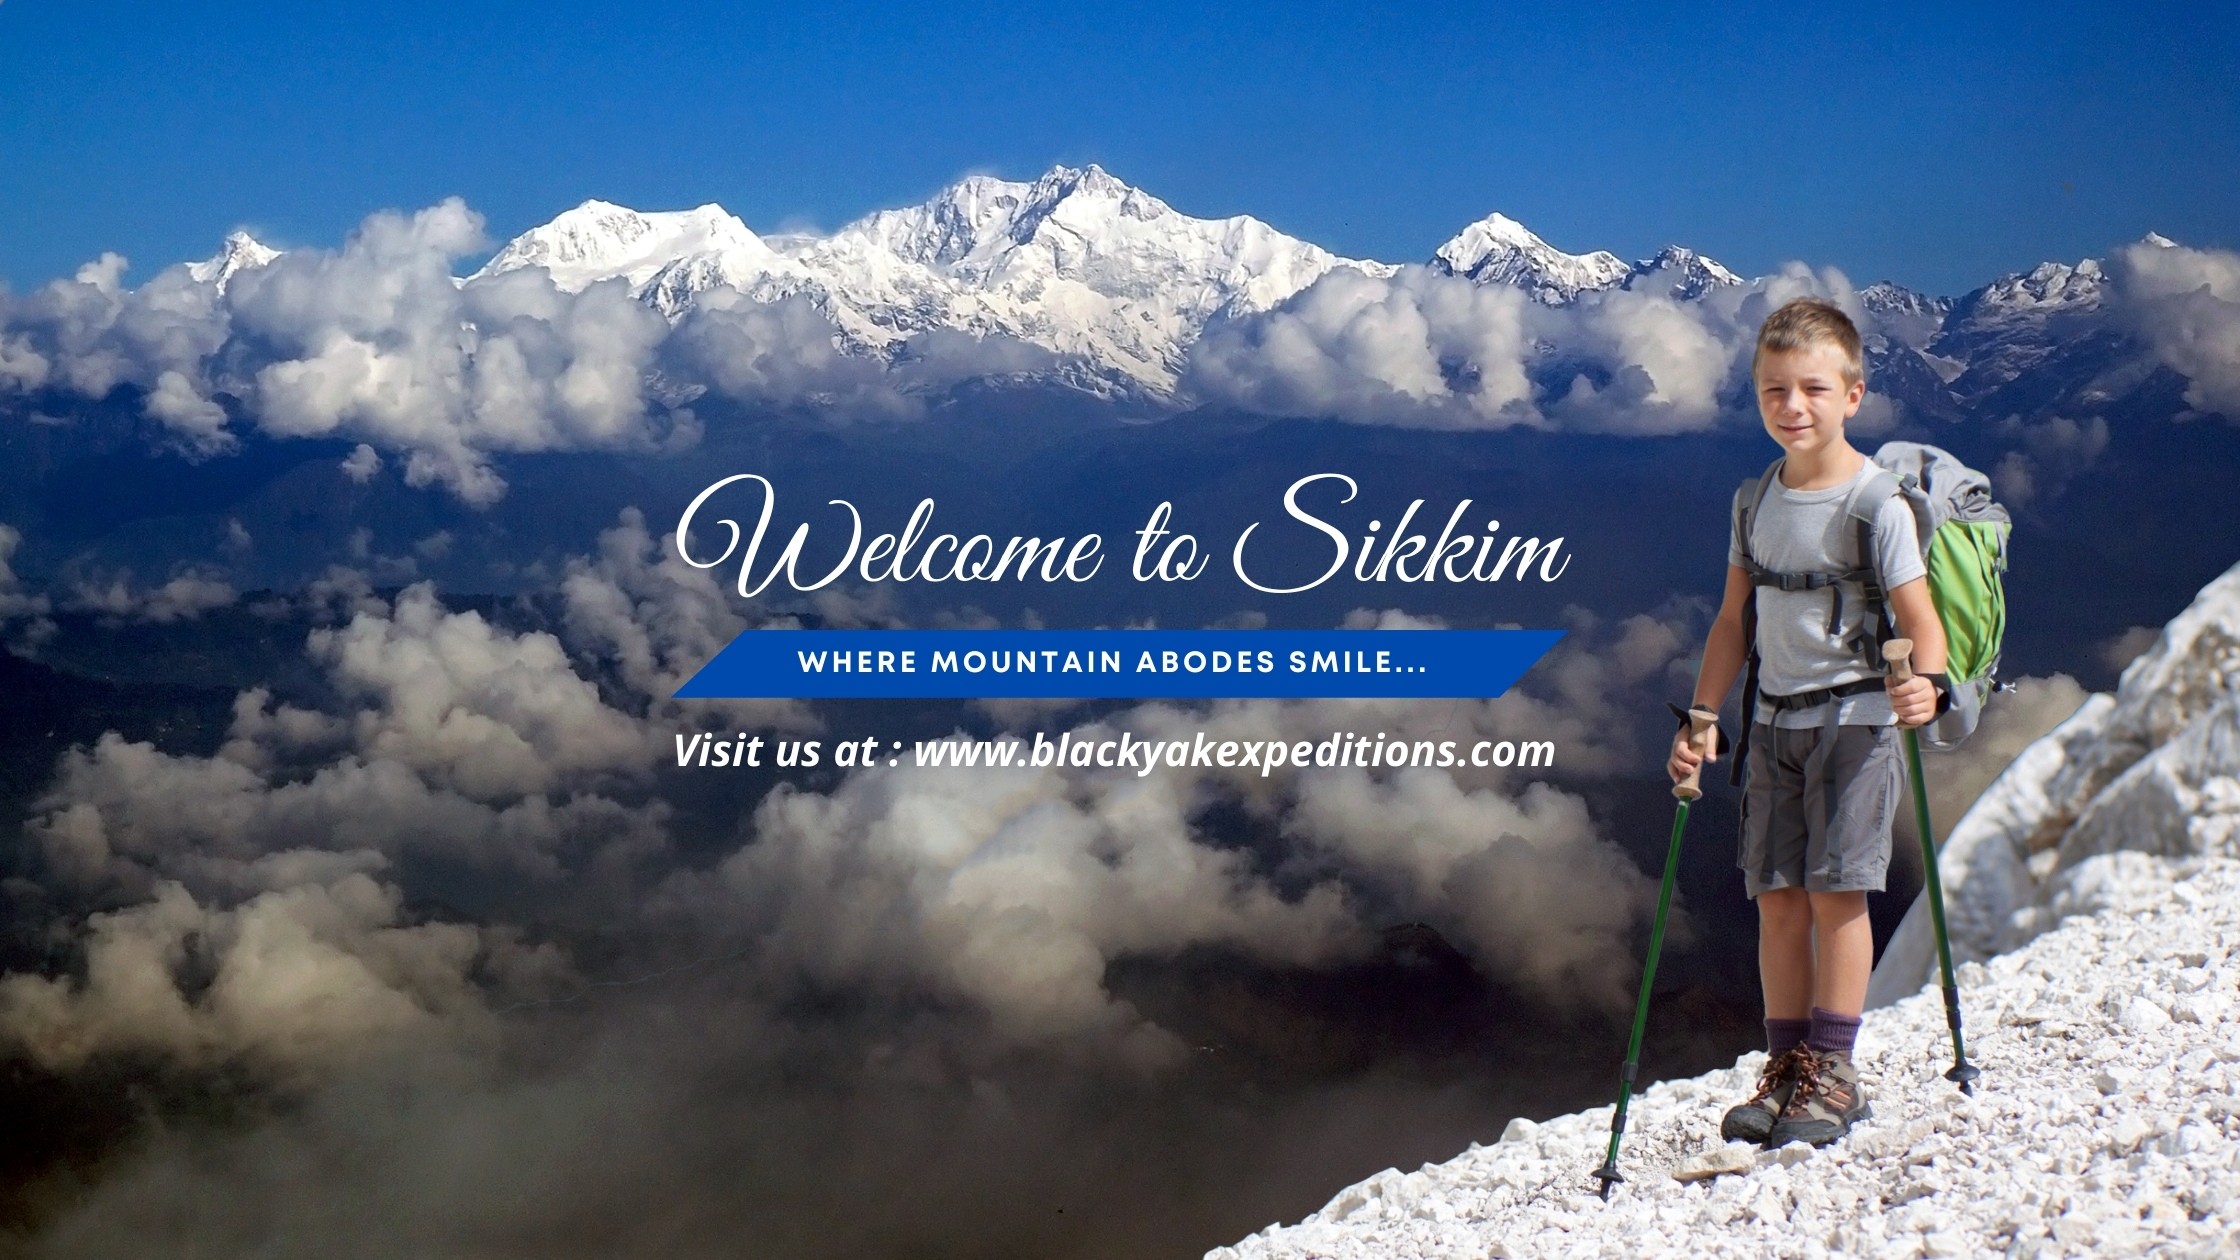 Sikkim Photos With mountain backdrop